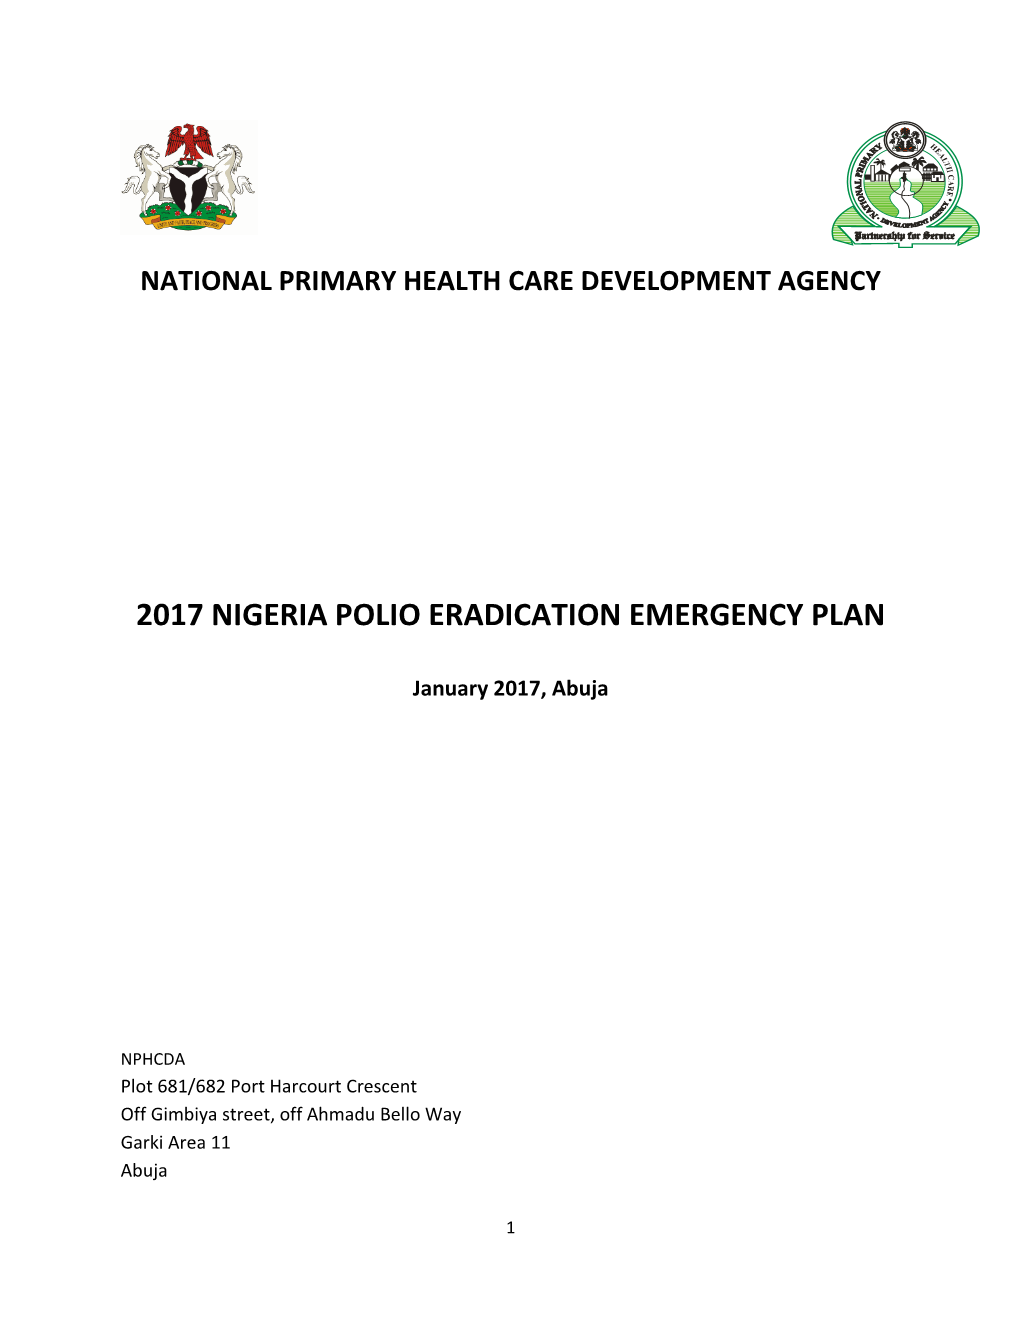 Nigeria National Emergency Action Plan – January 2017